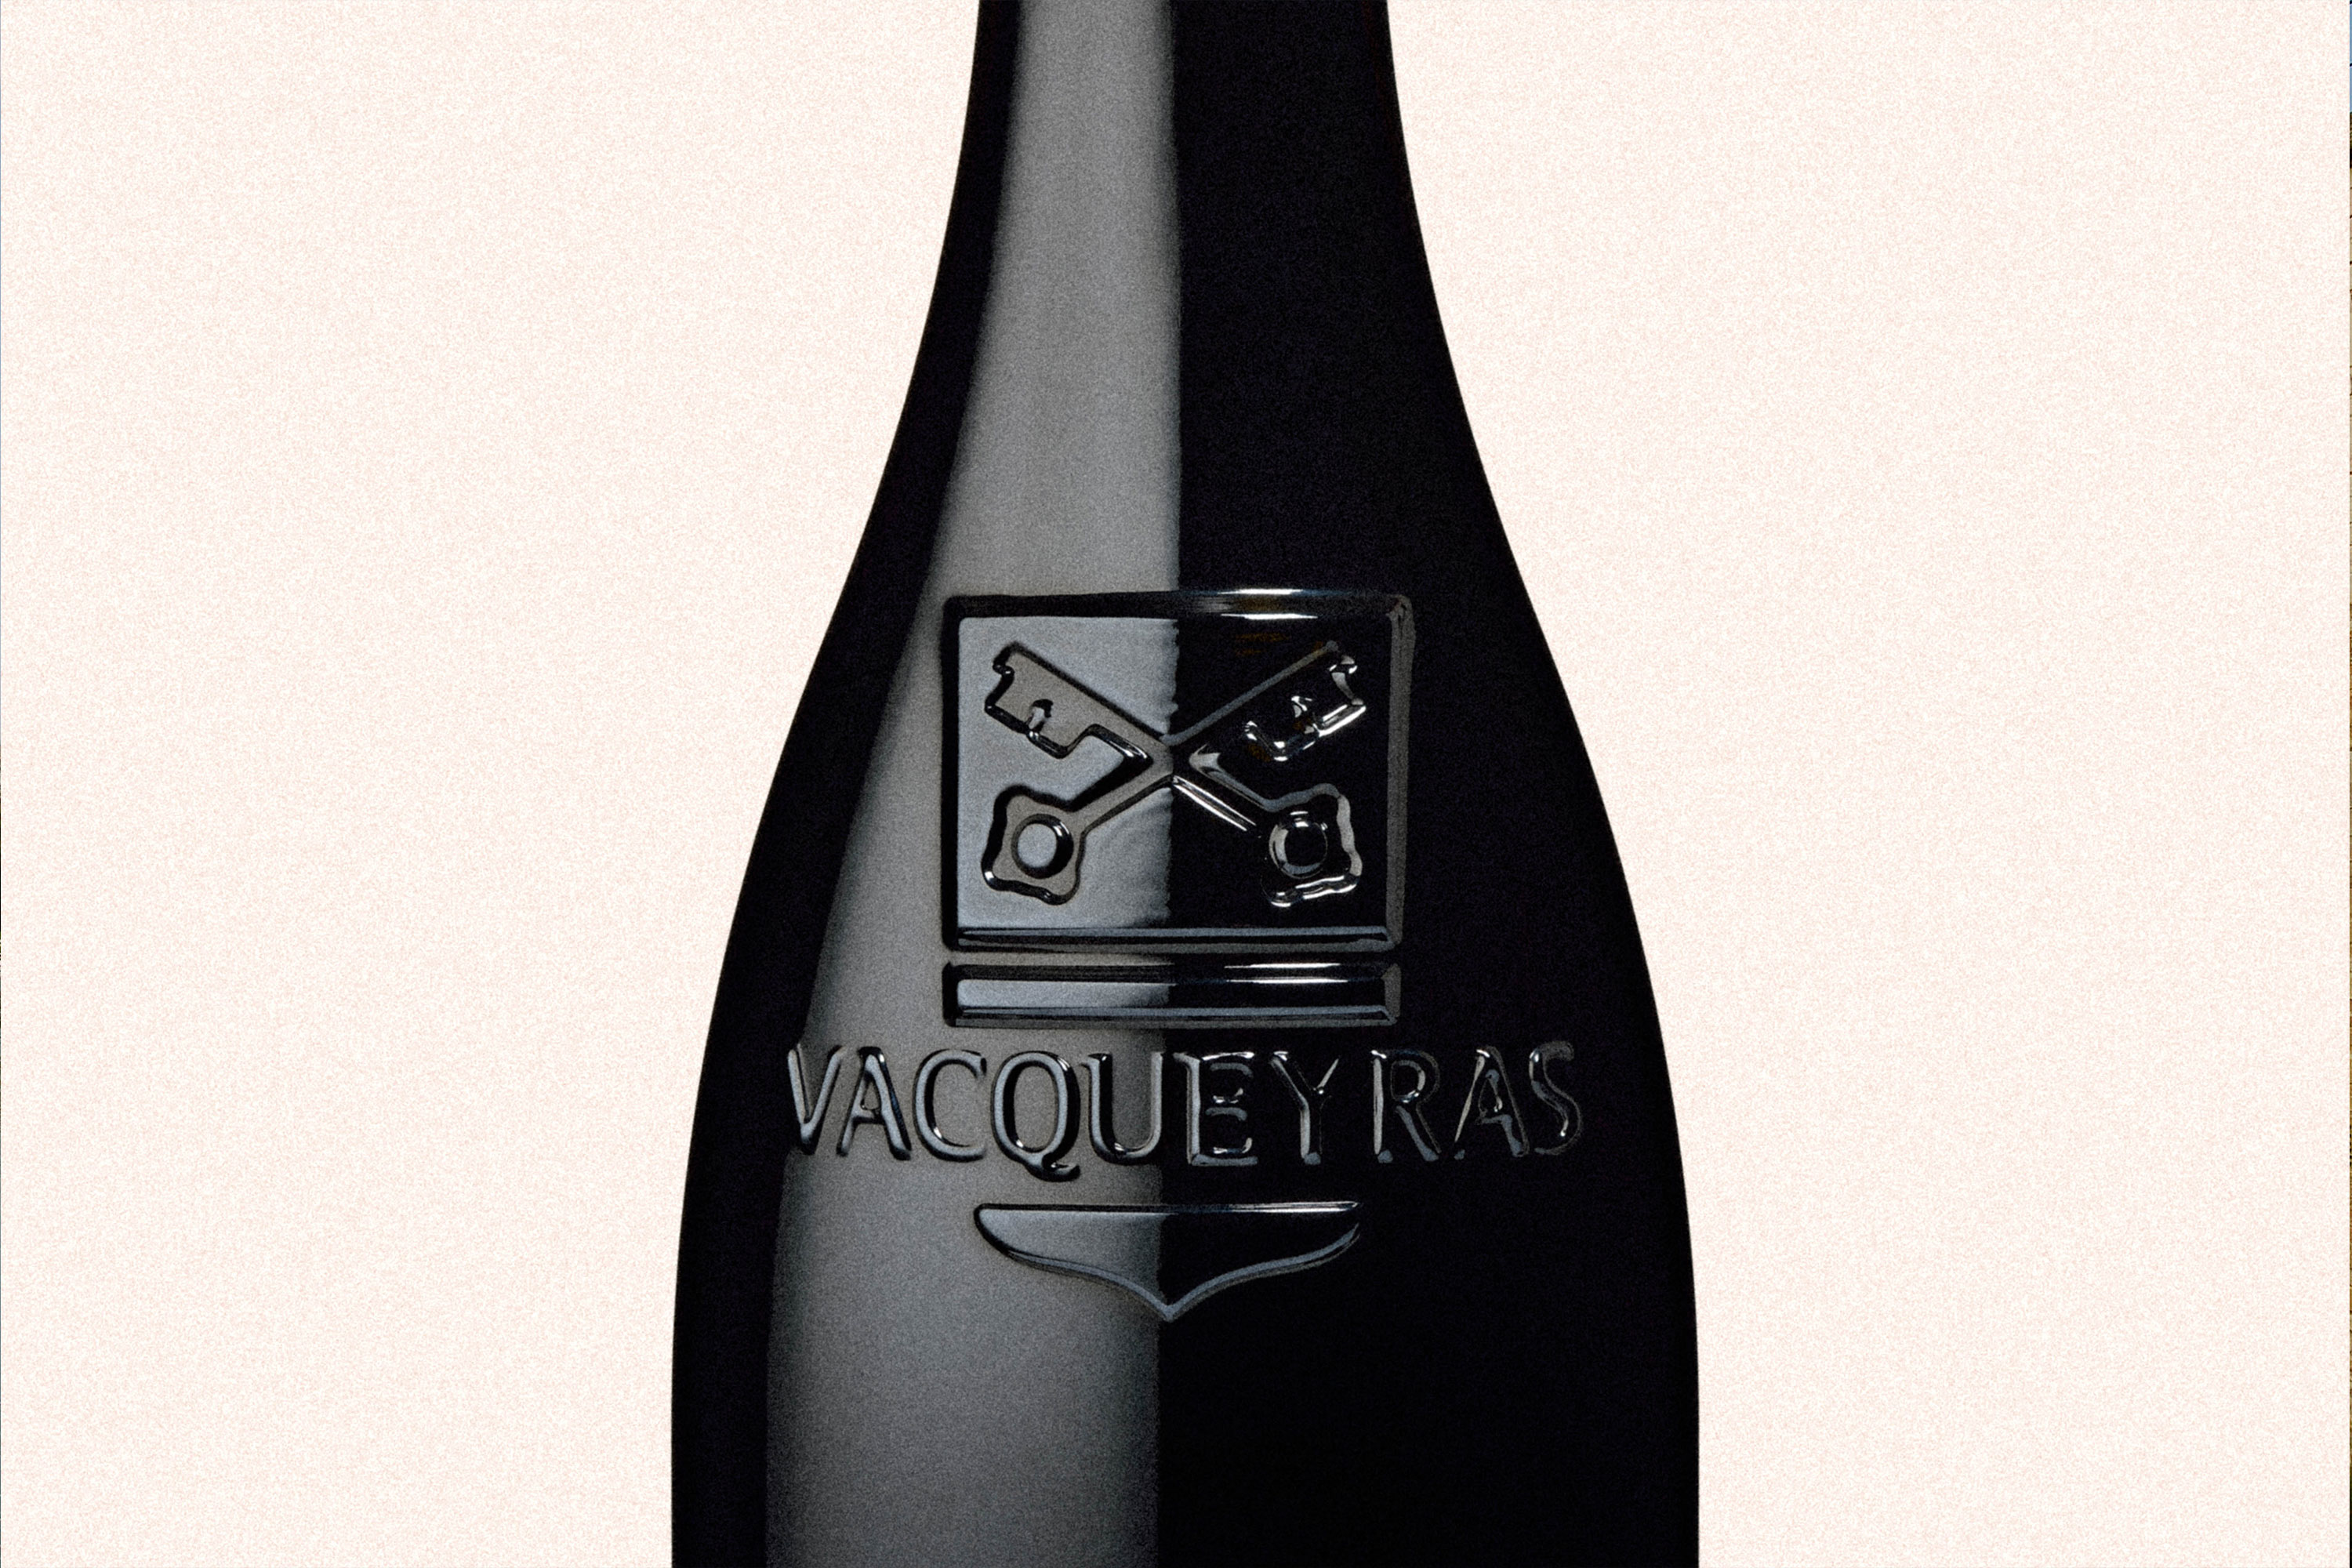 appellation - AOC The Vacqueyras